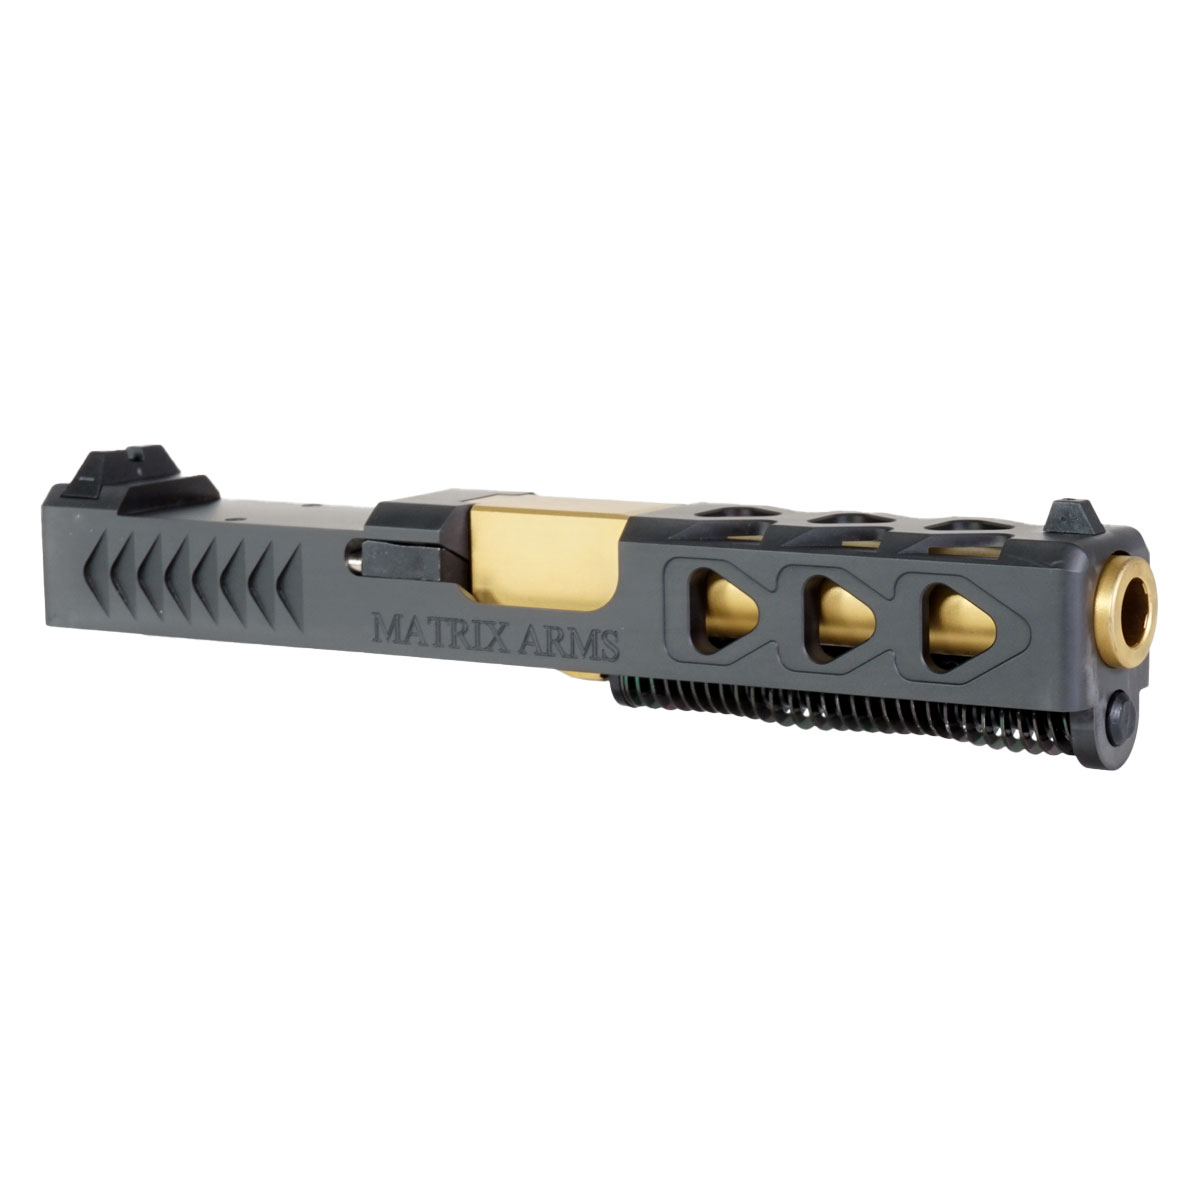 DTT 'The Black Knight' 9mm Complete Slide Kit - Glock 19 Gen 1-3 Compatible